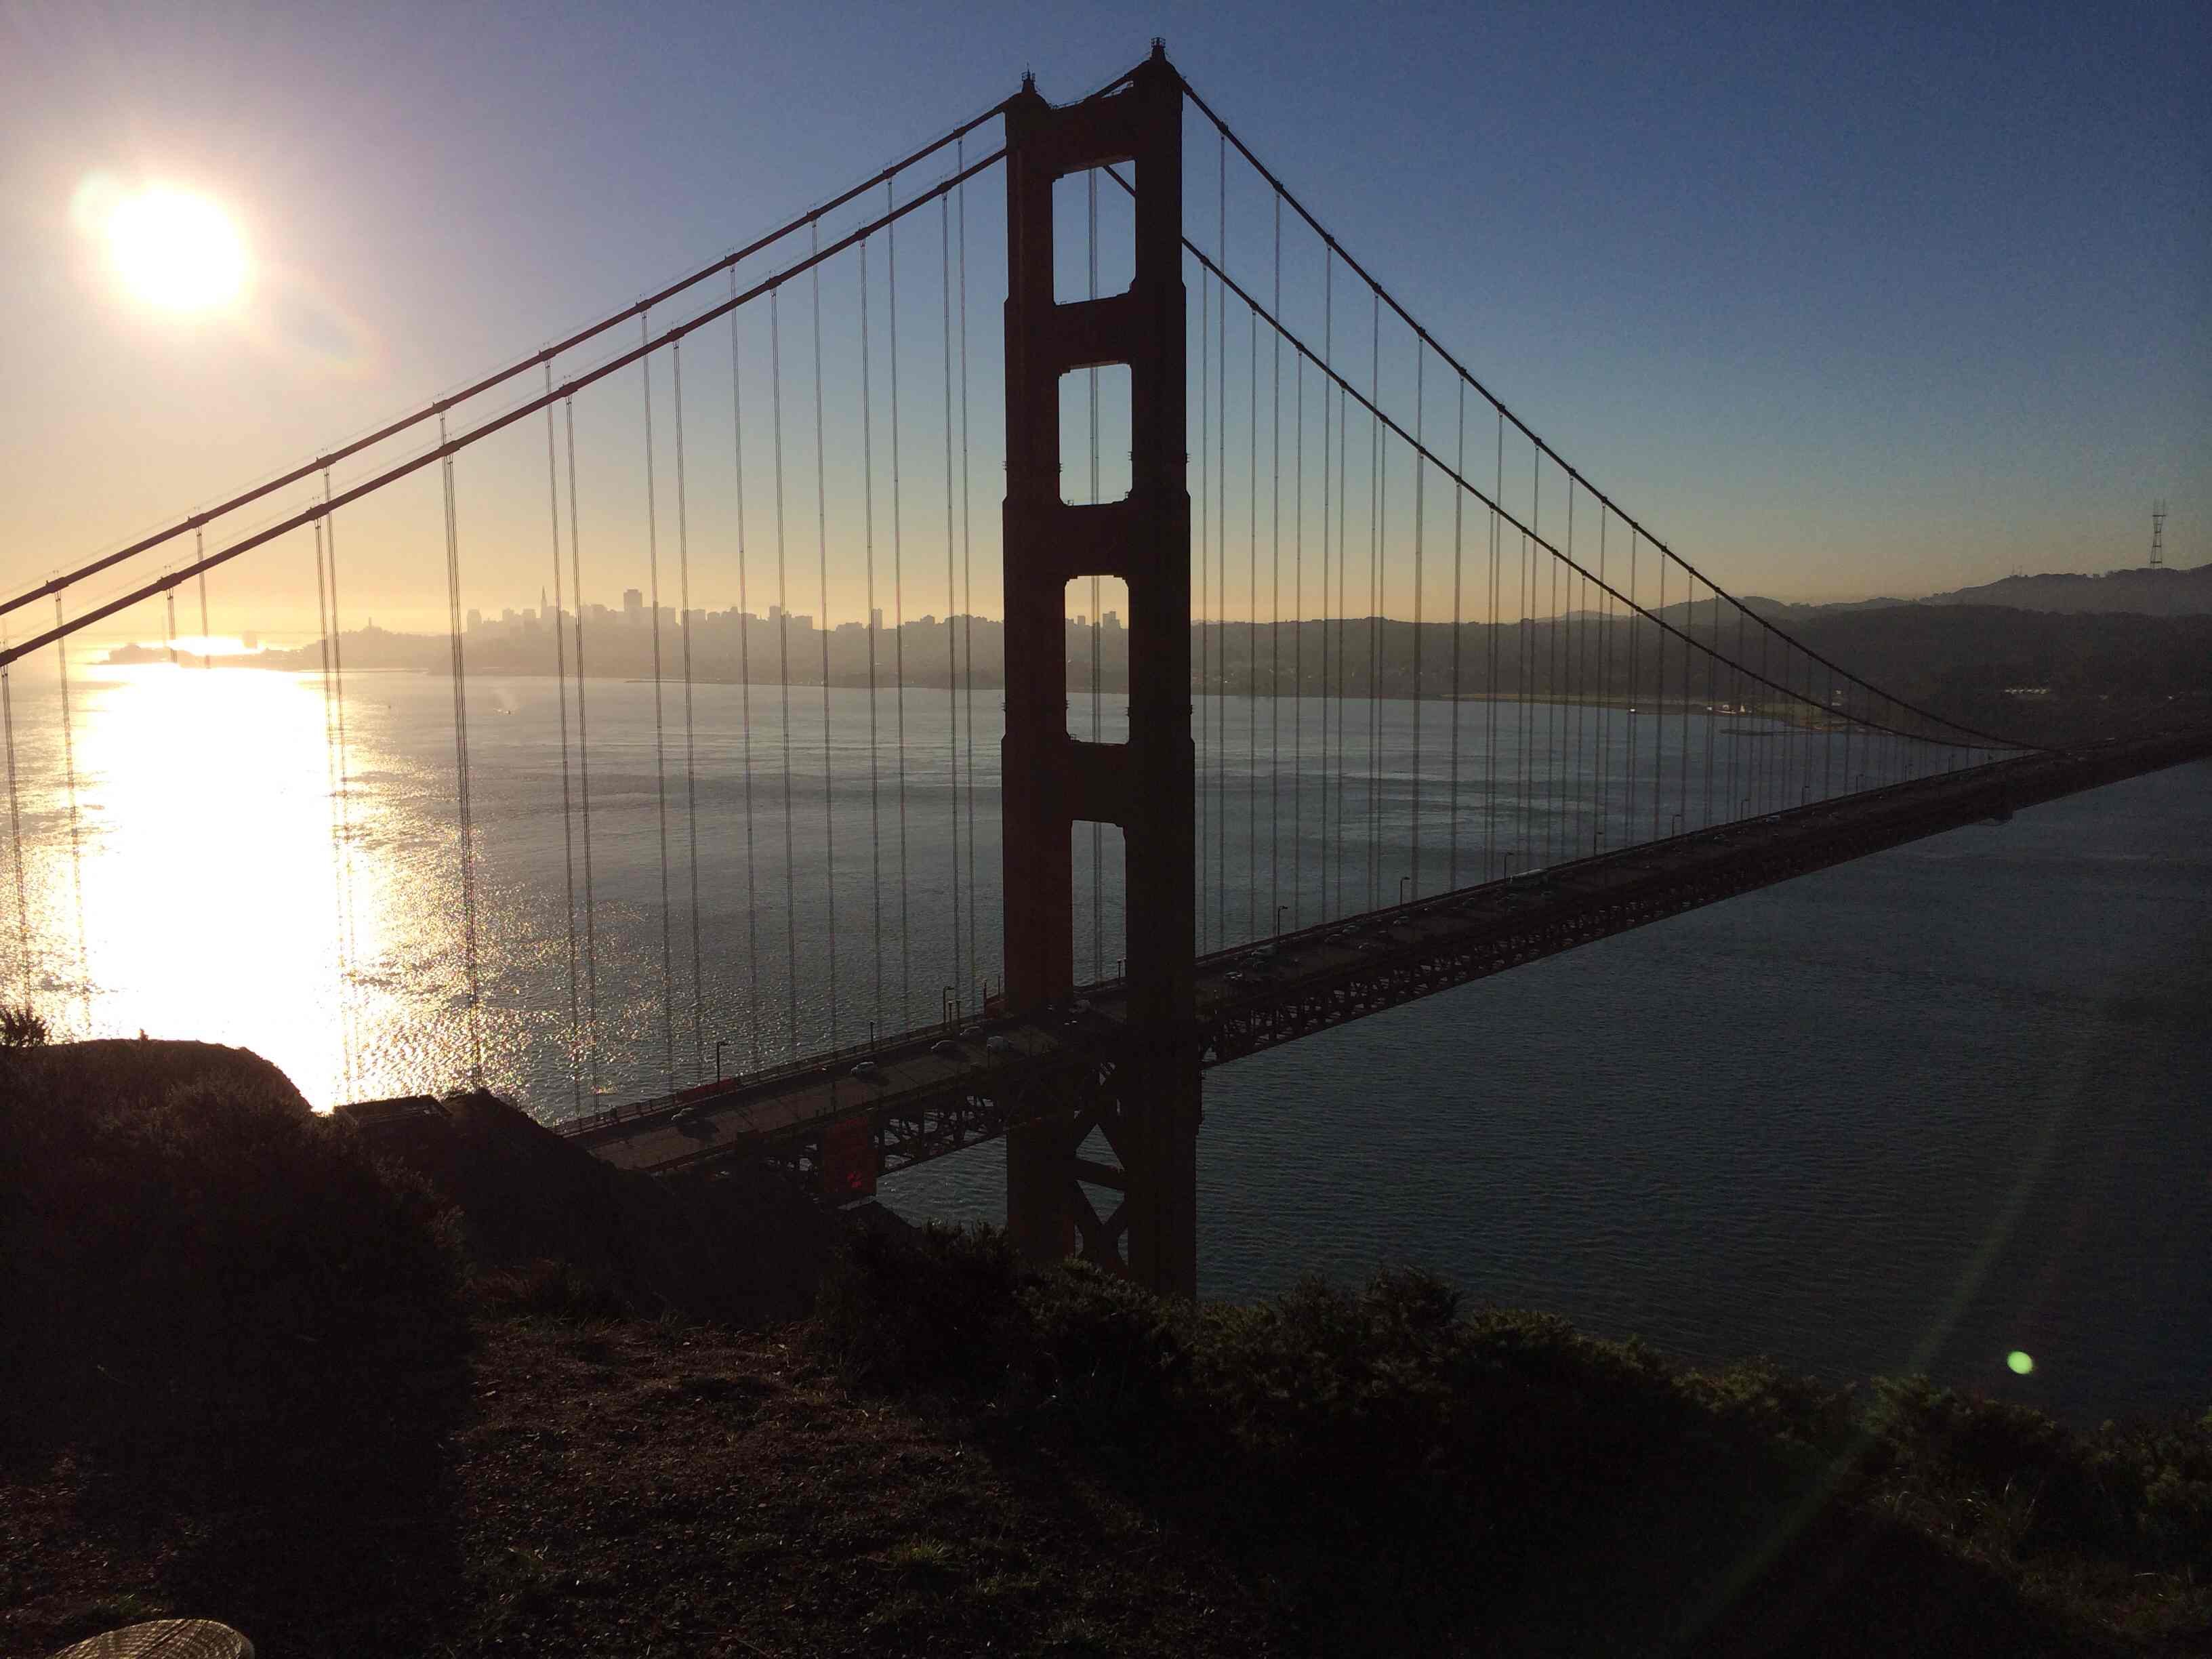 Golden Gate Bridge at sunrise on 10/14/13
(Received via CNN Capture)